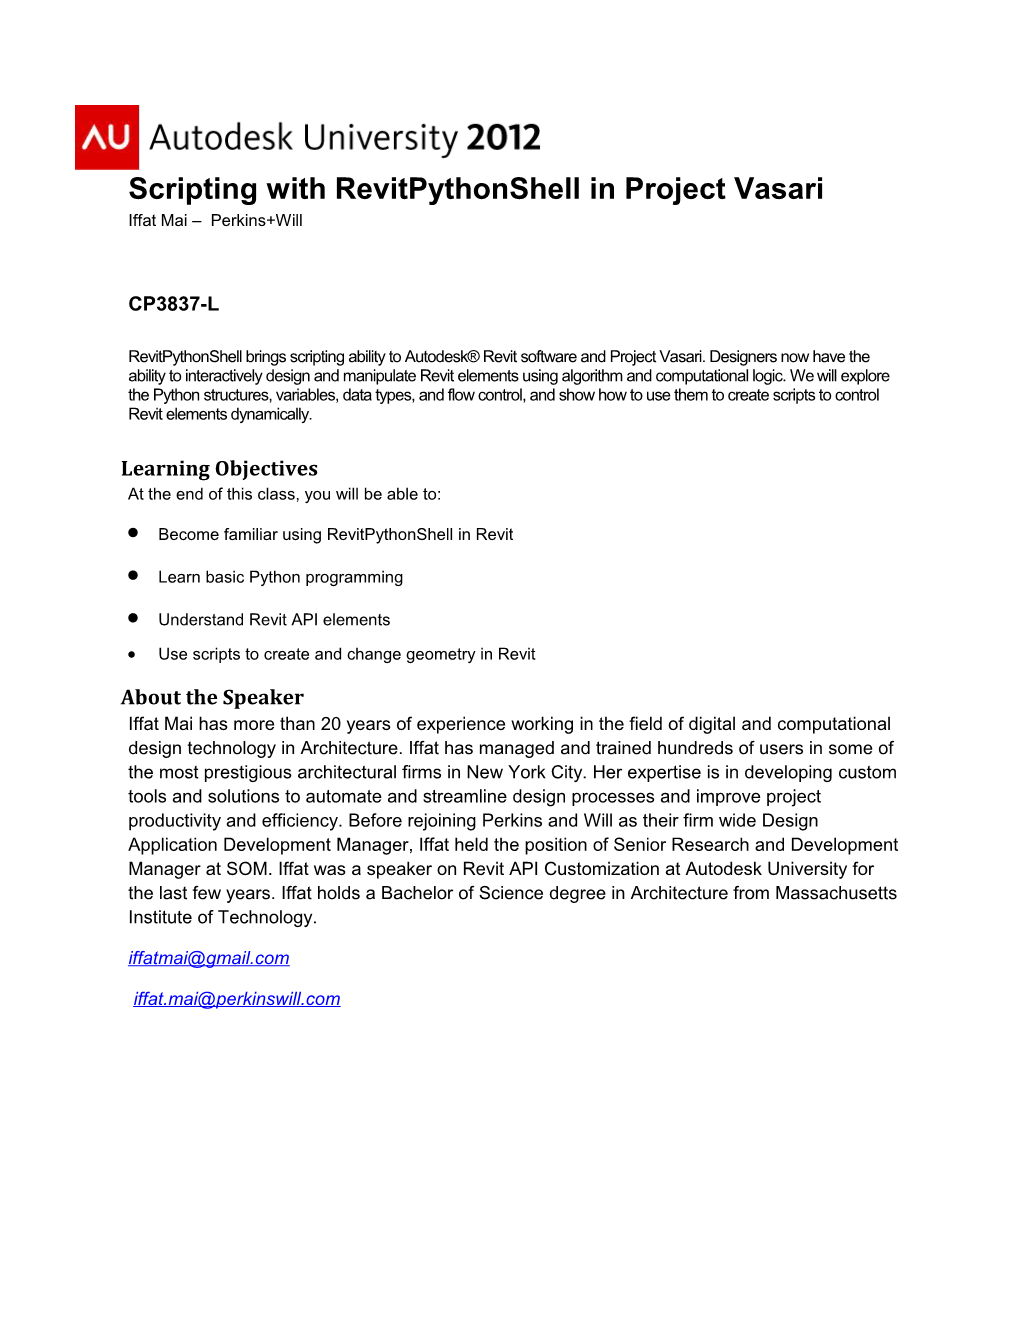 Scripting with Revitpythonshell in Project Vasari